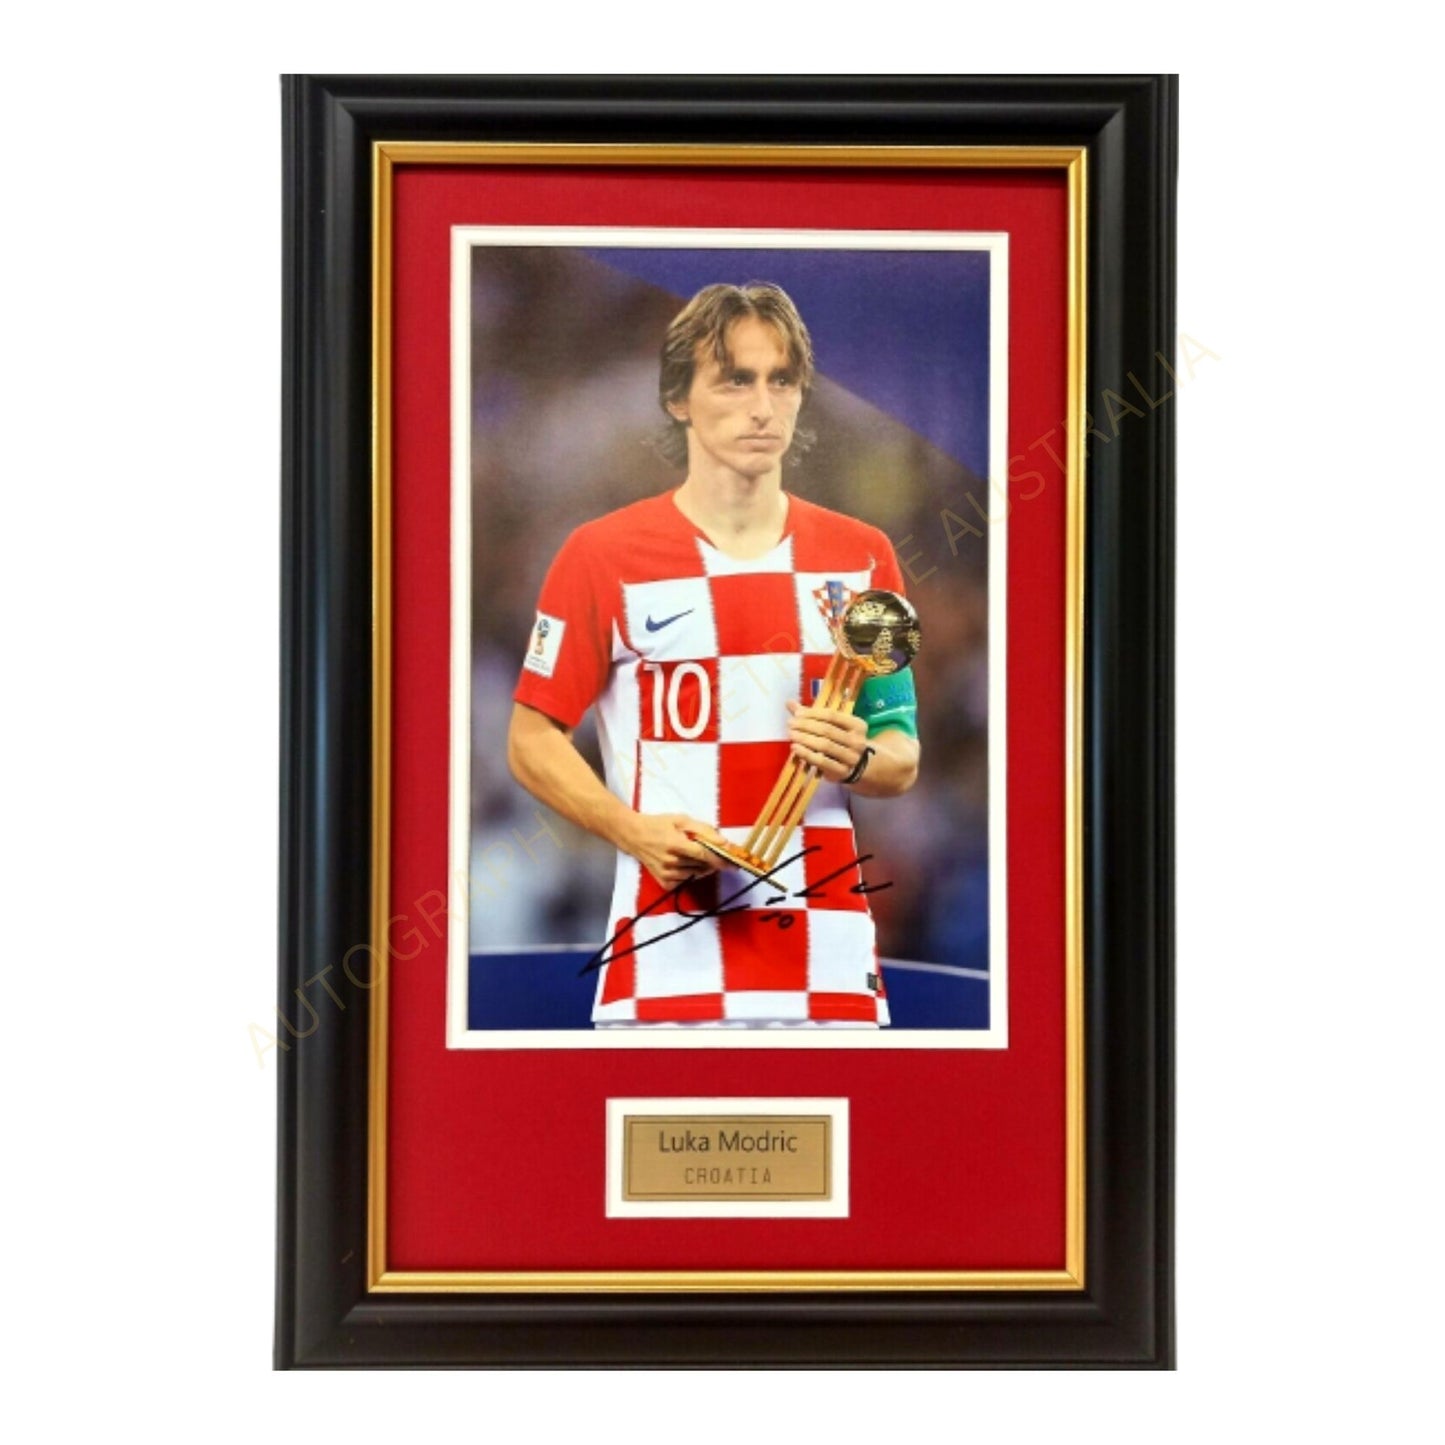 Luca Modric Croatia Signed Framed Photo Print Soccer Memorabilia